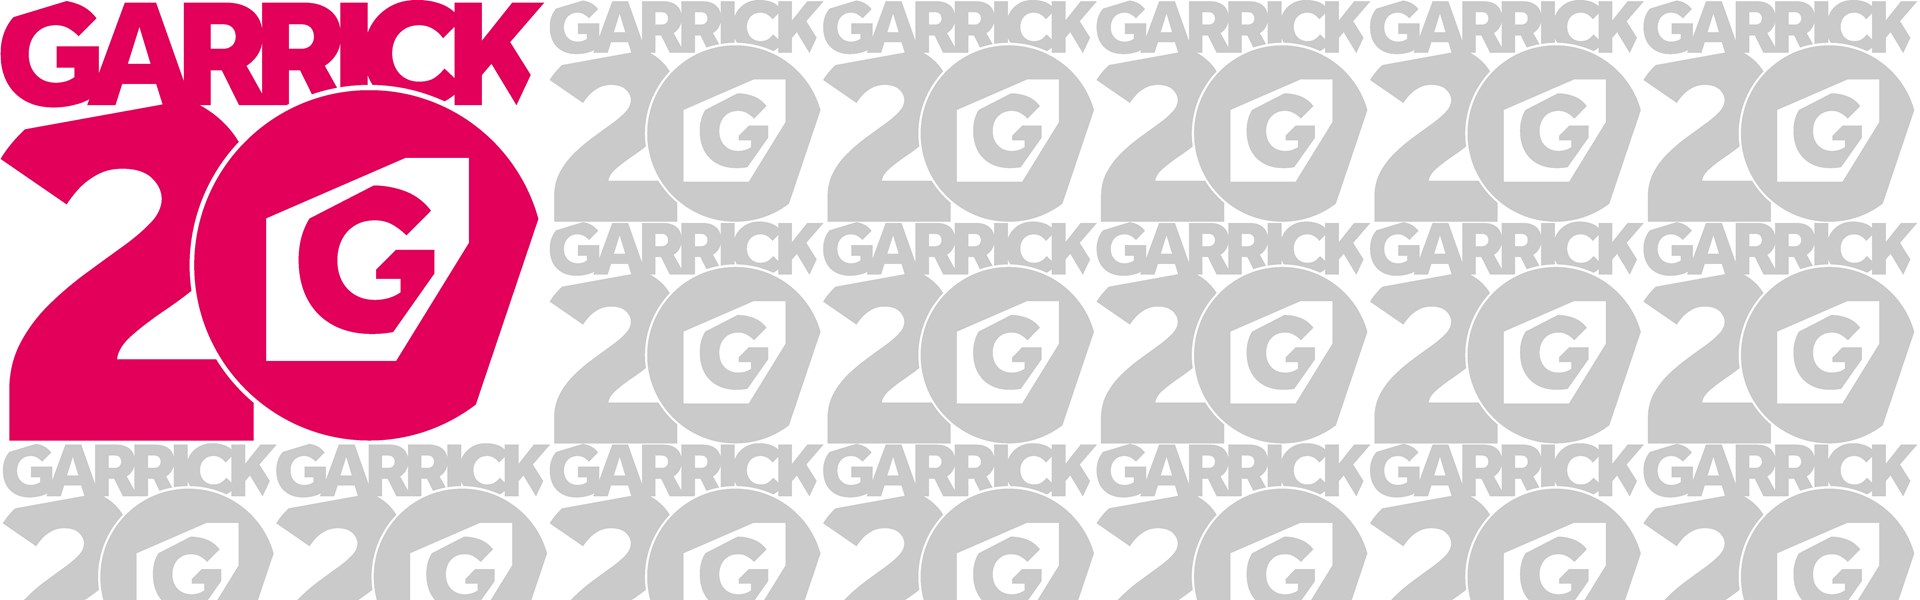 Garrick20